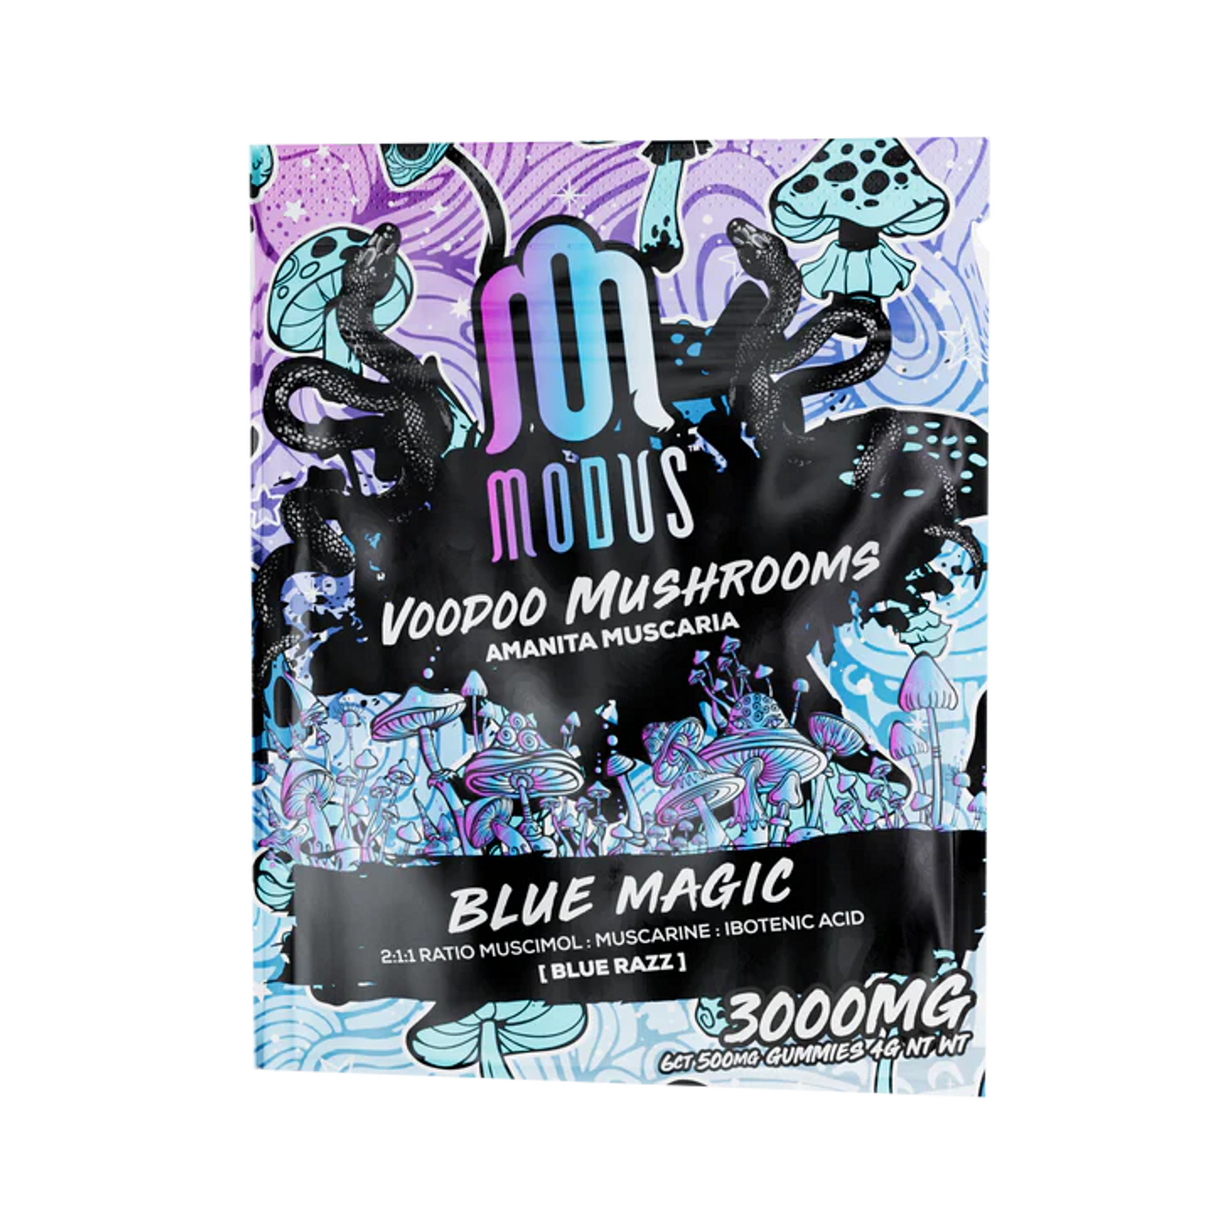 Modus Voodoo Mushrooms 3000mg Gummies - Blue Magic